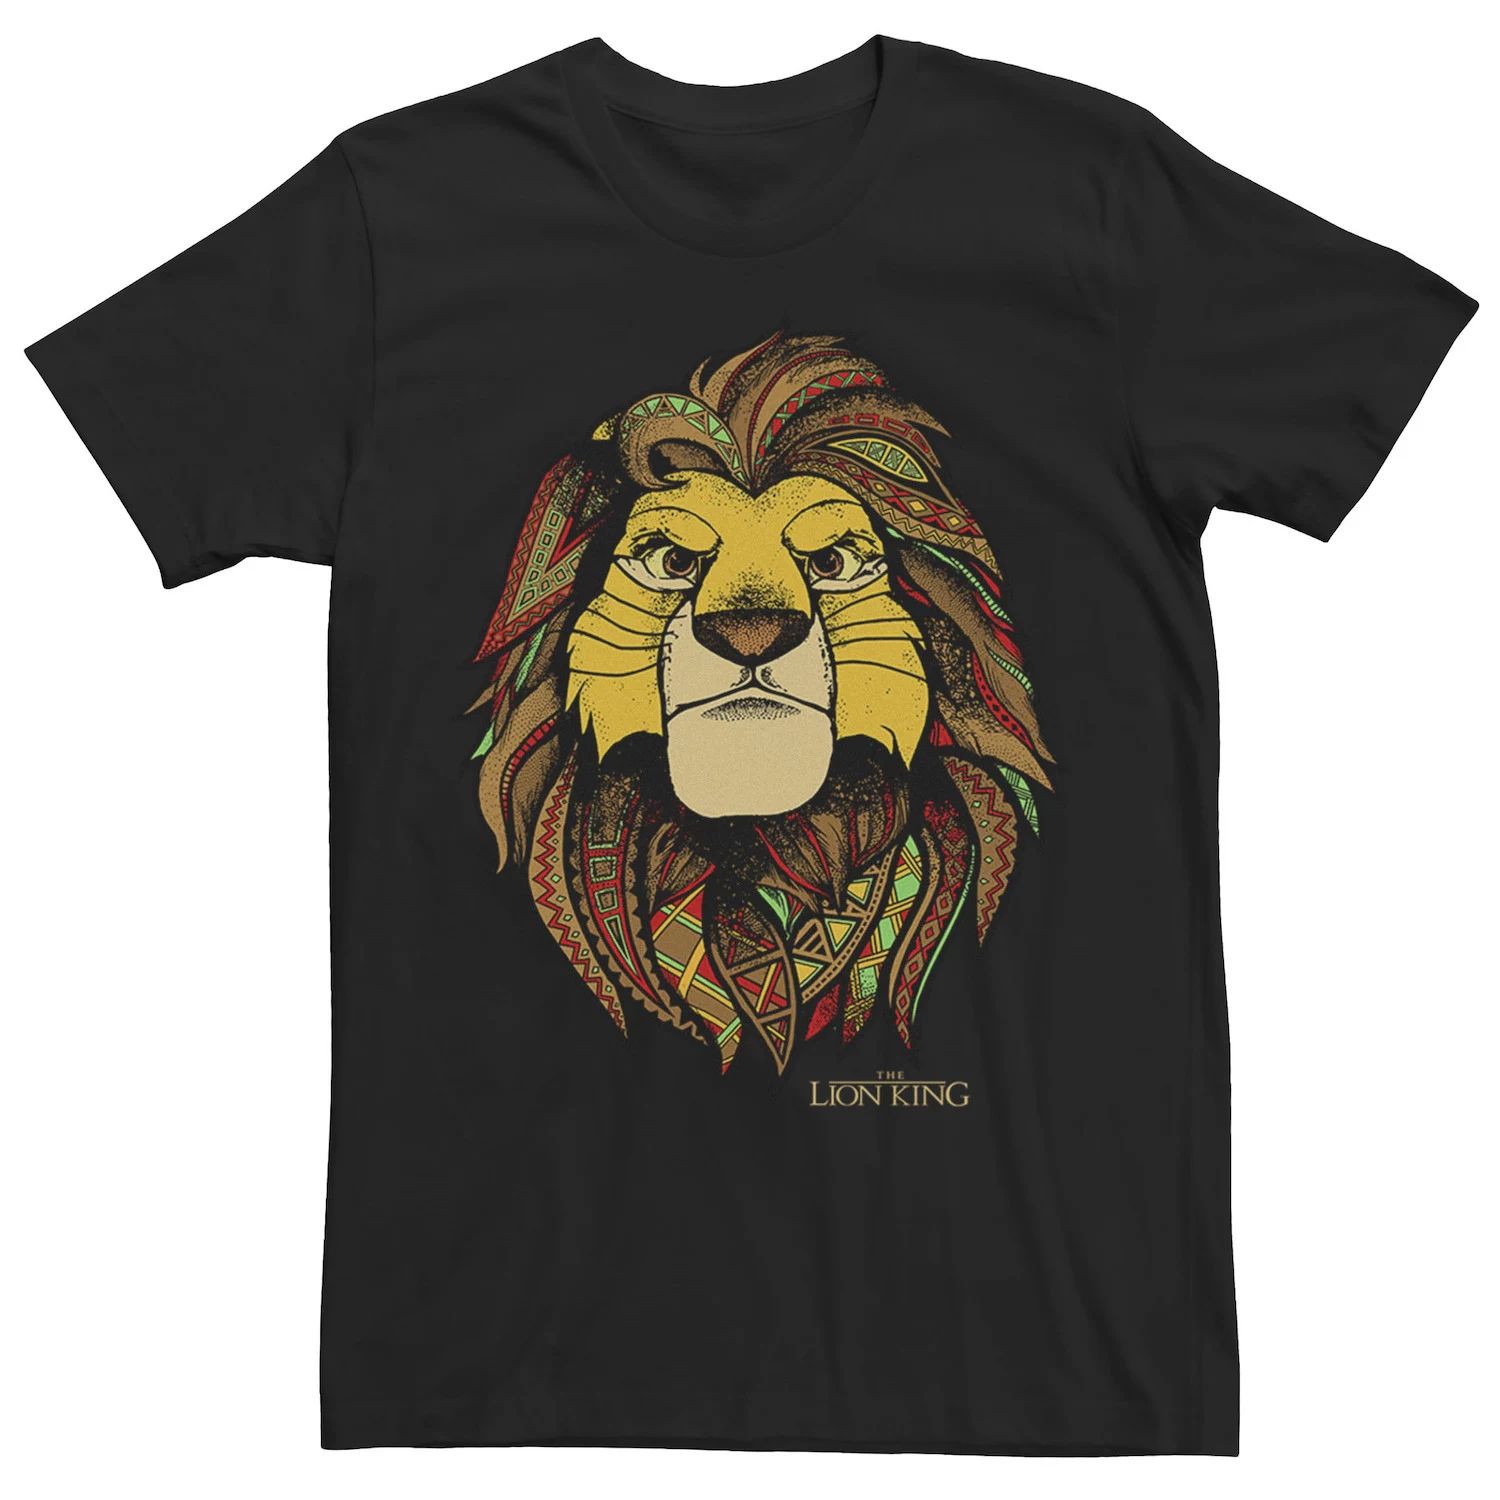 Мужская красочная футболка Disney The Lion King с геометрическим рисунком Simba